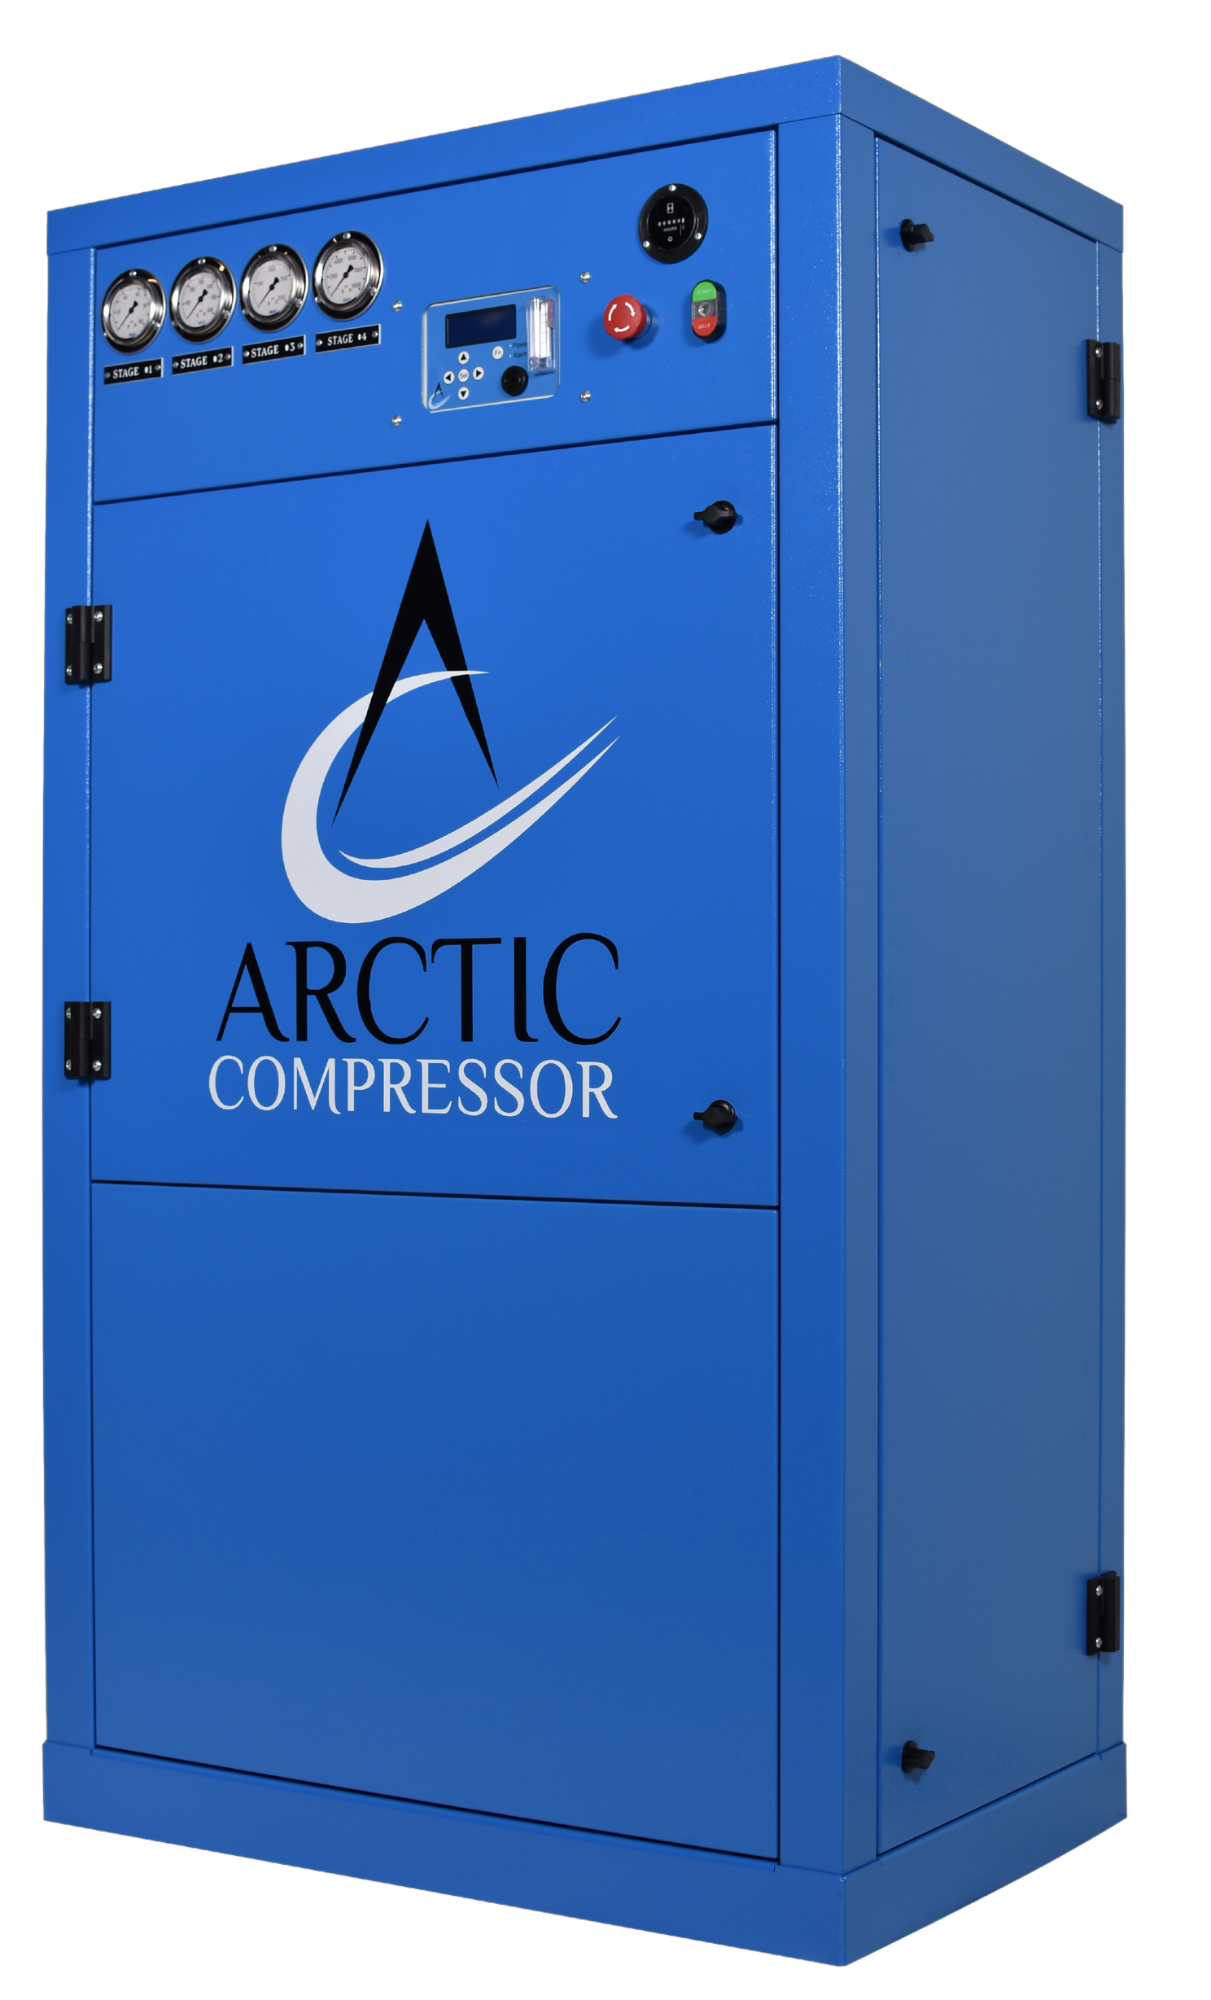 Industrial Air Compressors